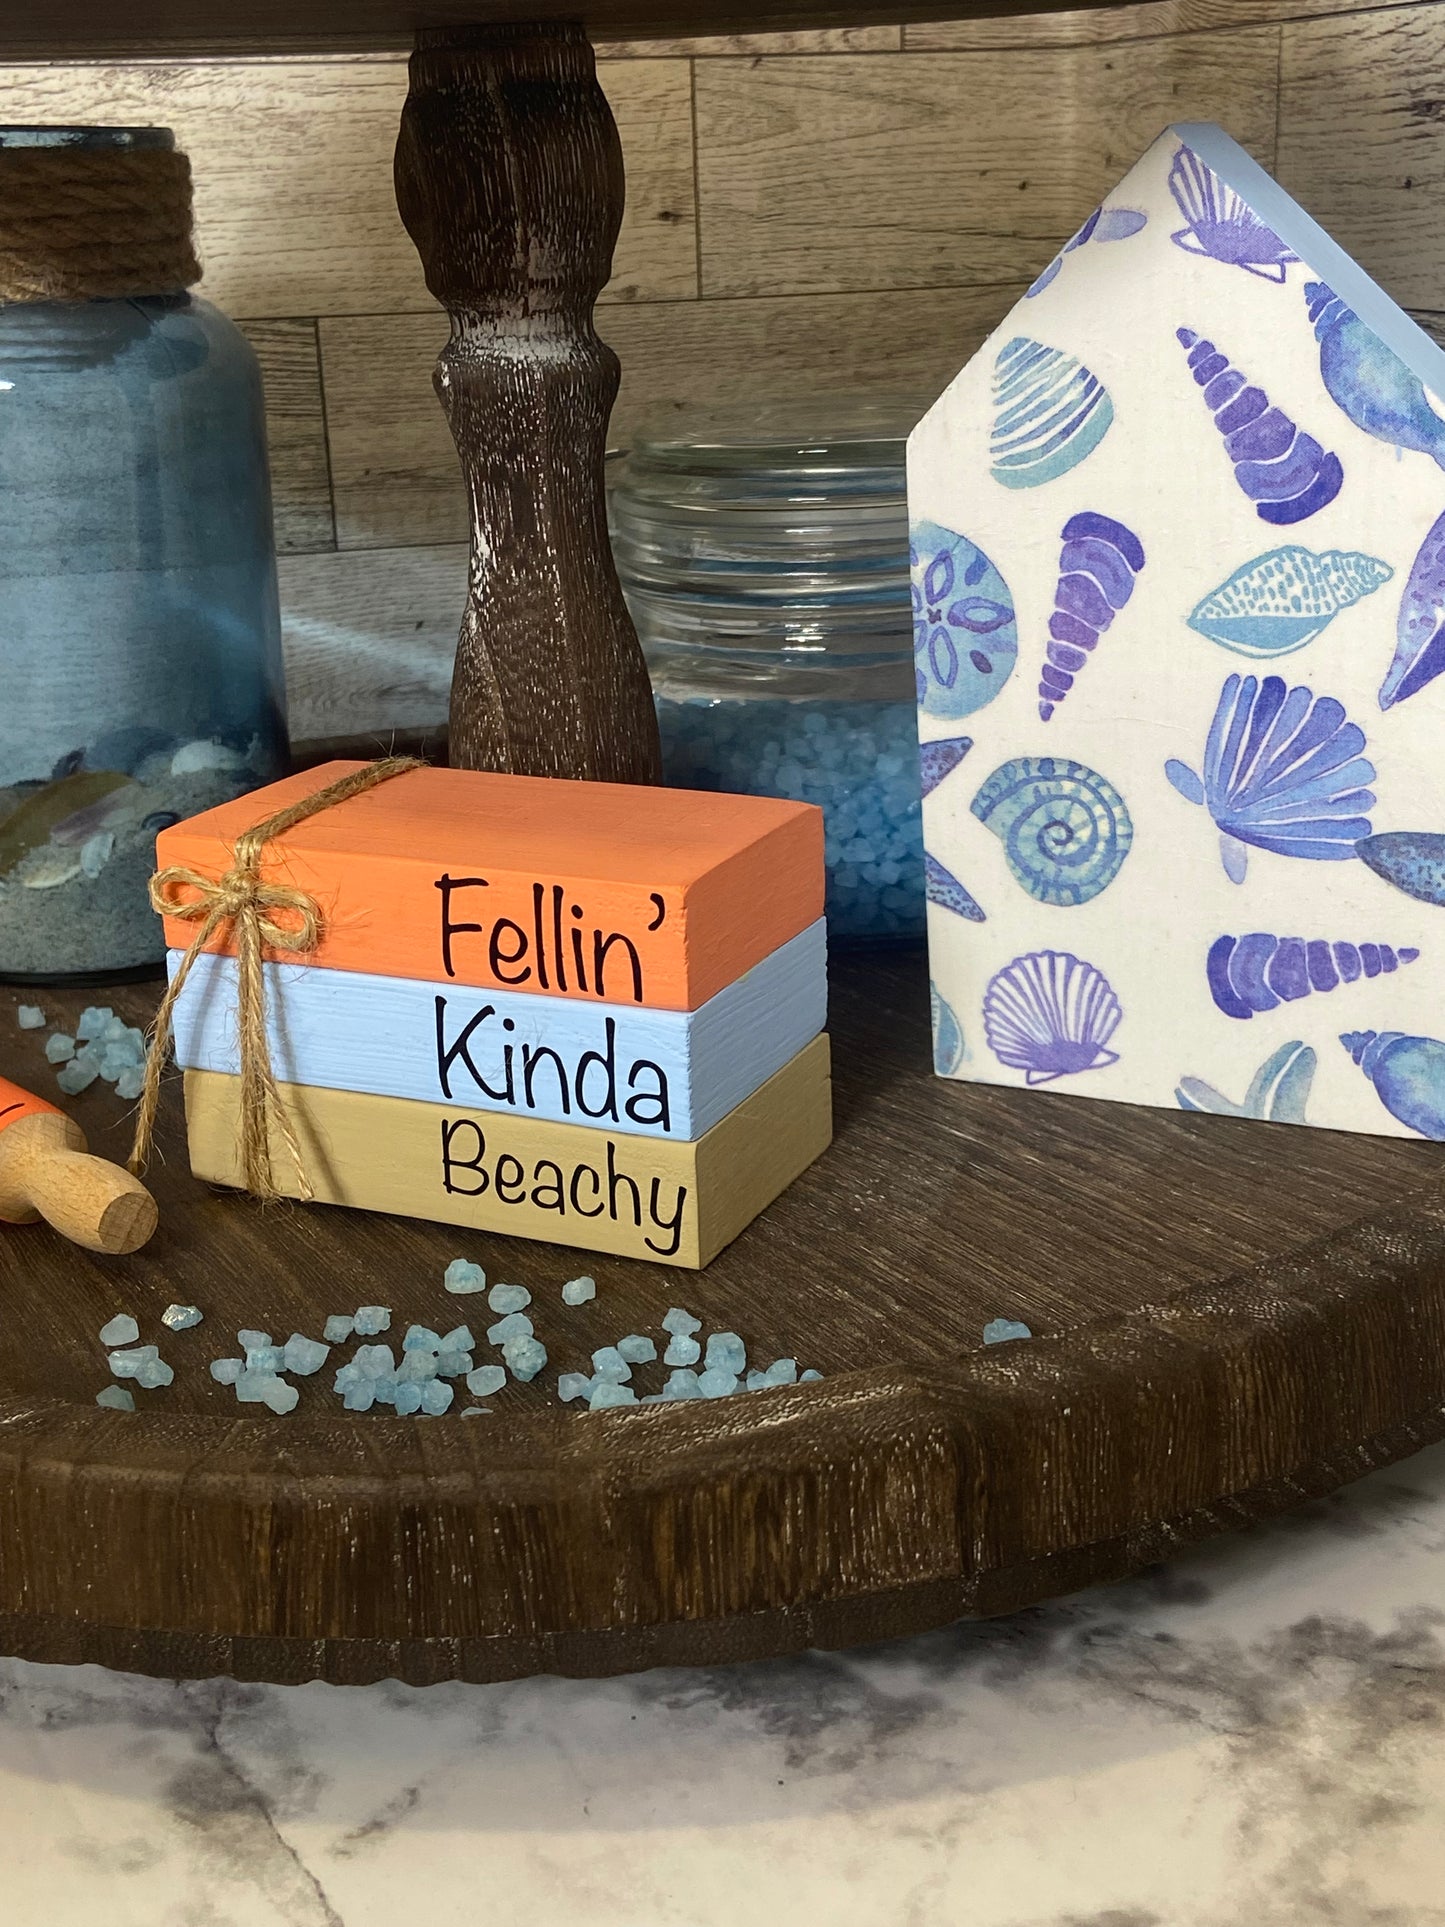 Fellin’ Kinda Beachy - Small Tiered Tray Book Stack